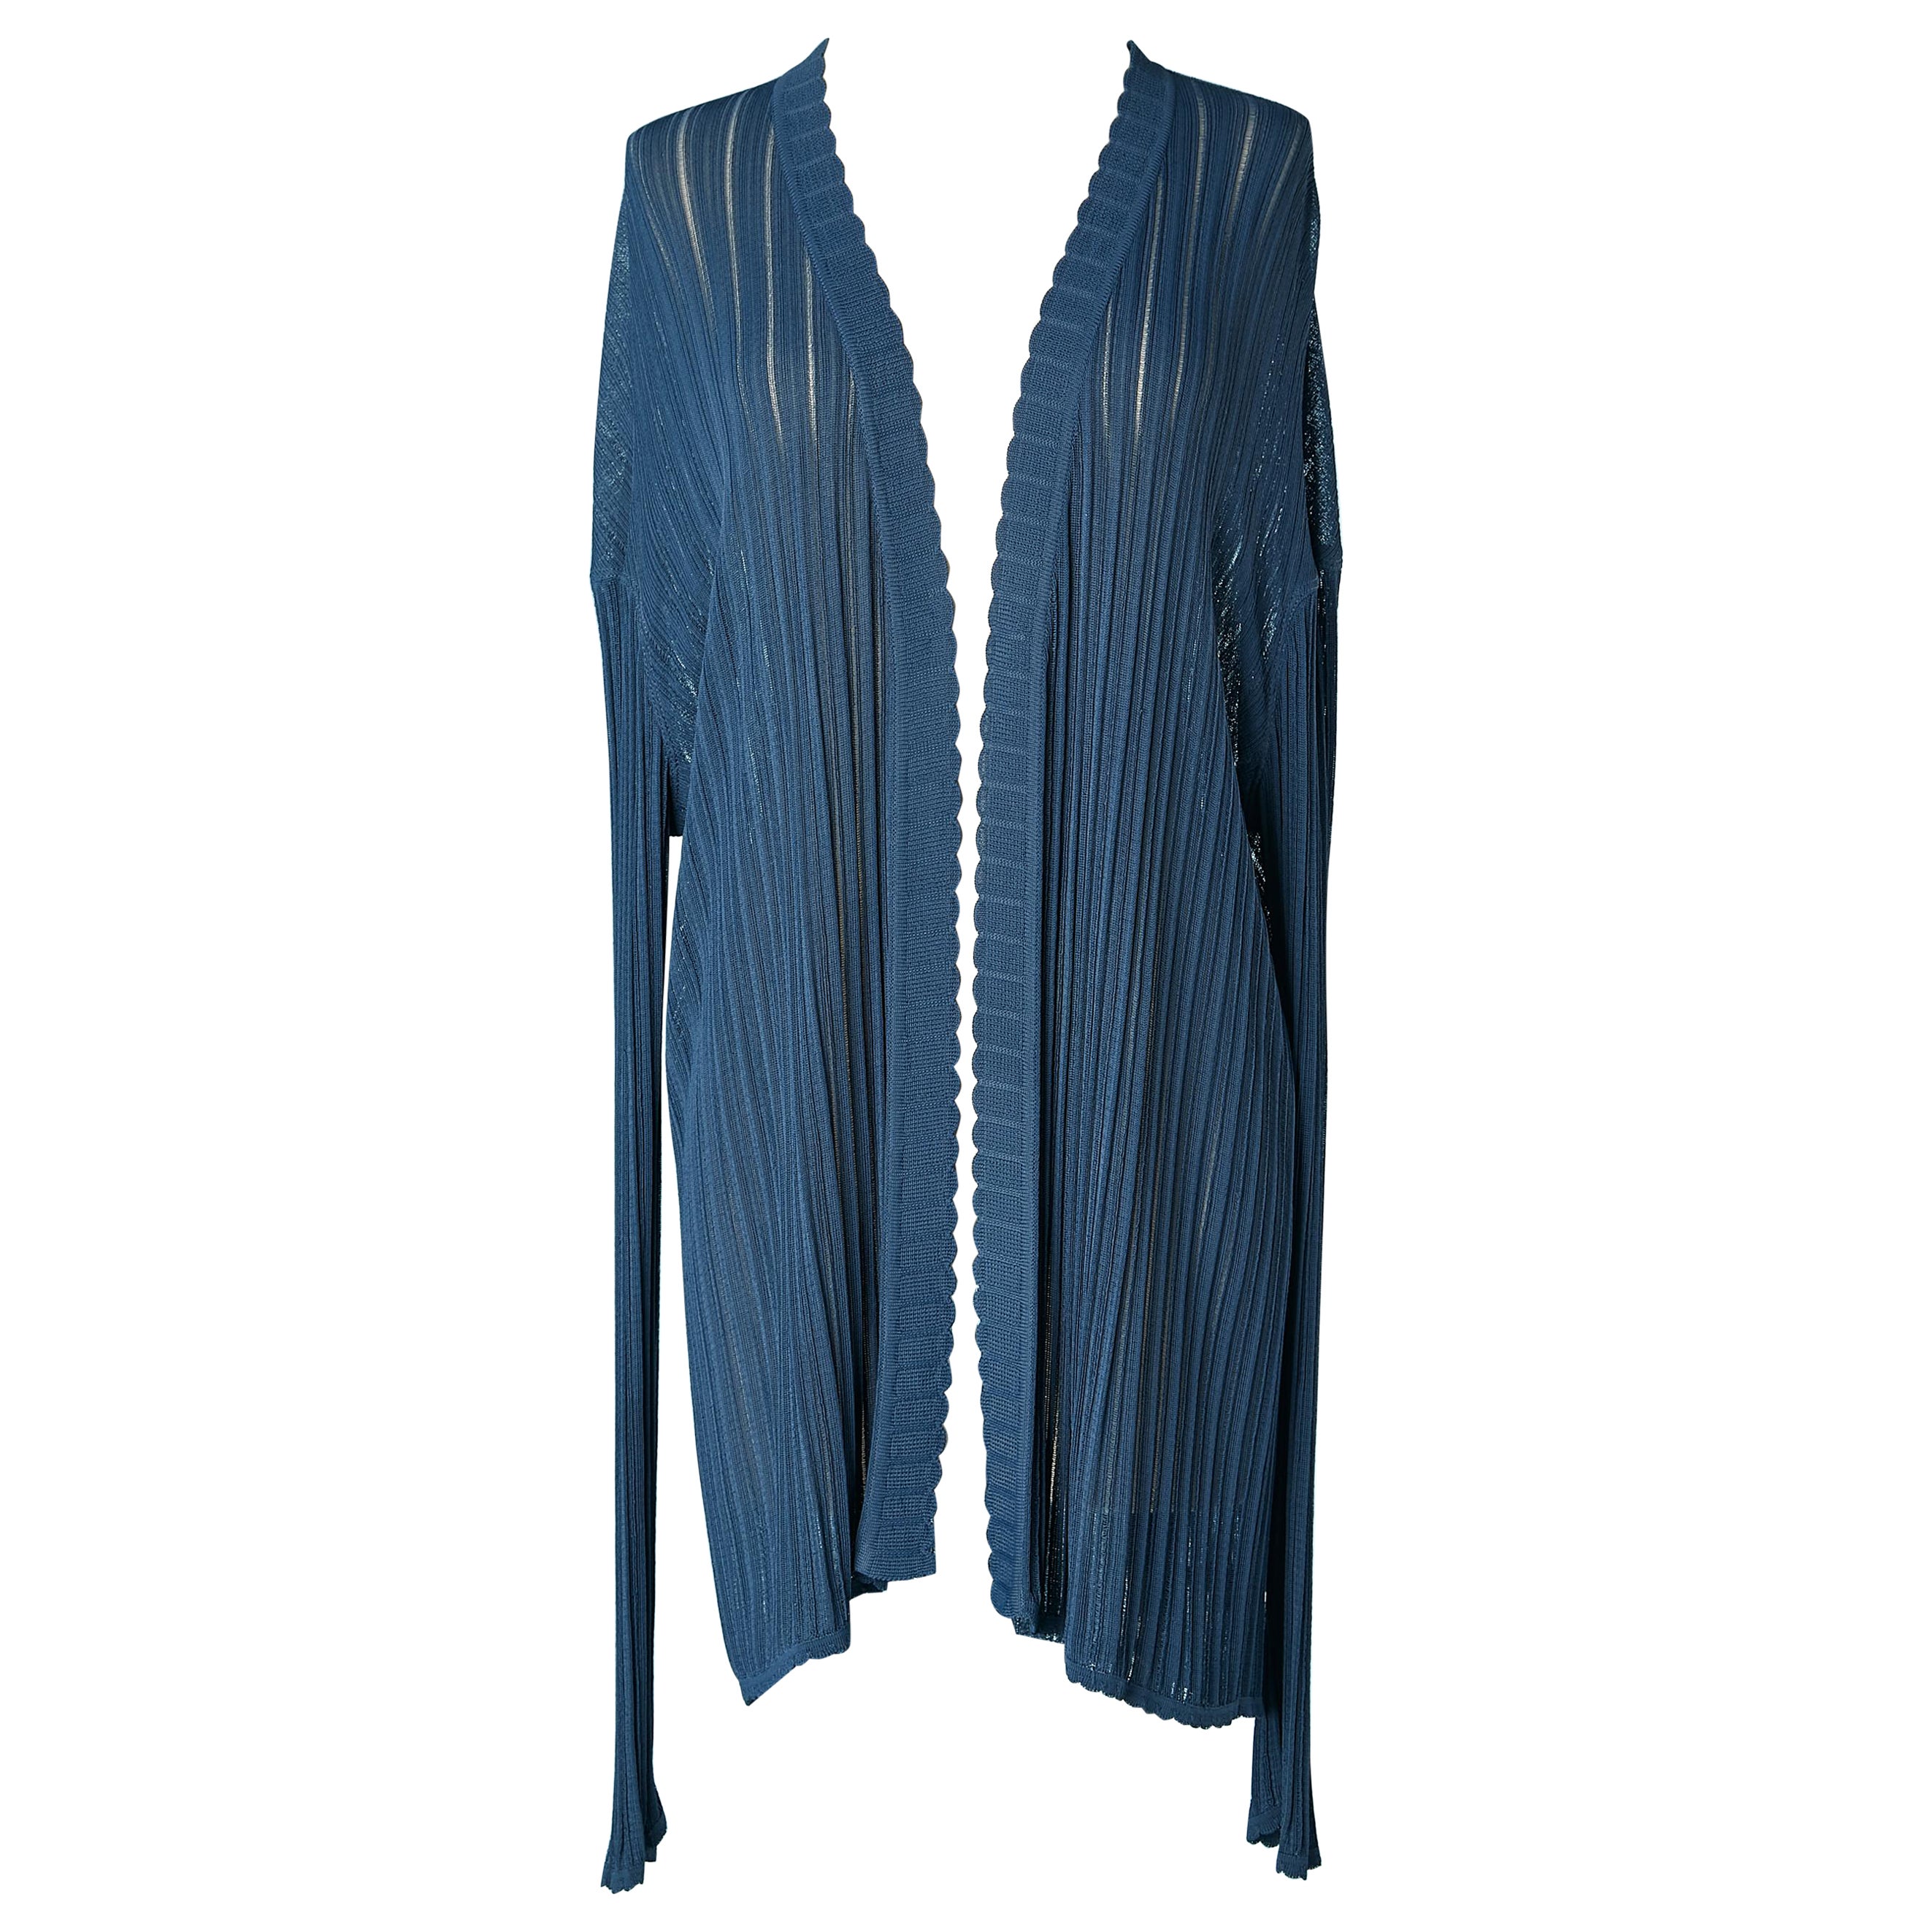 Blue ribbed edge to edge cardigan in rayon knit AlaÏa 